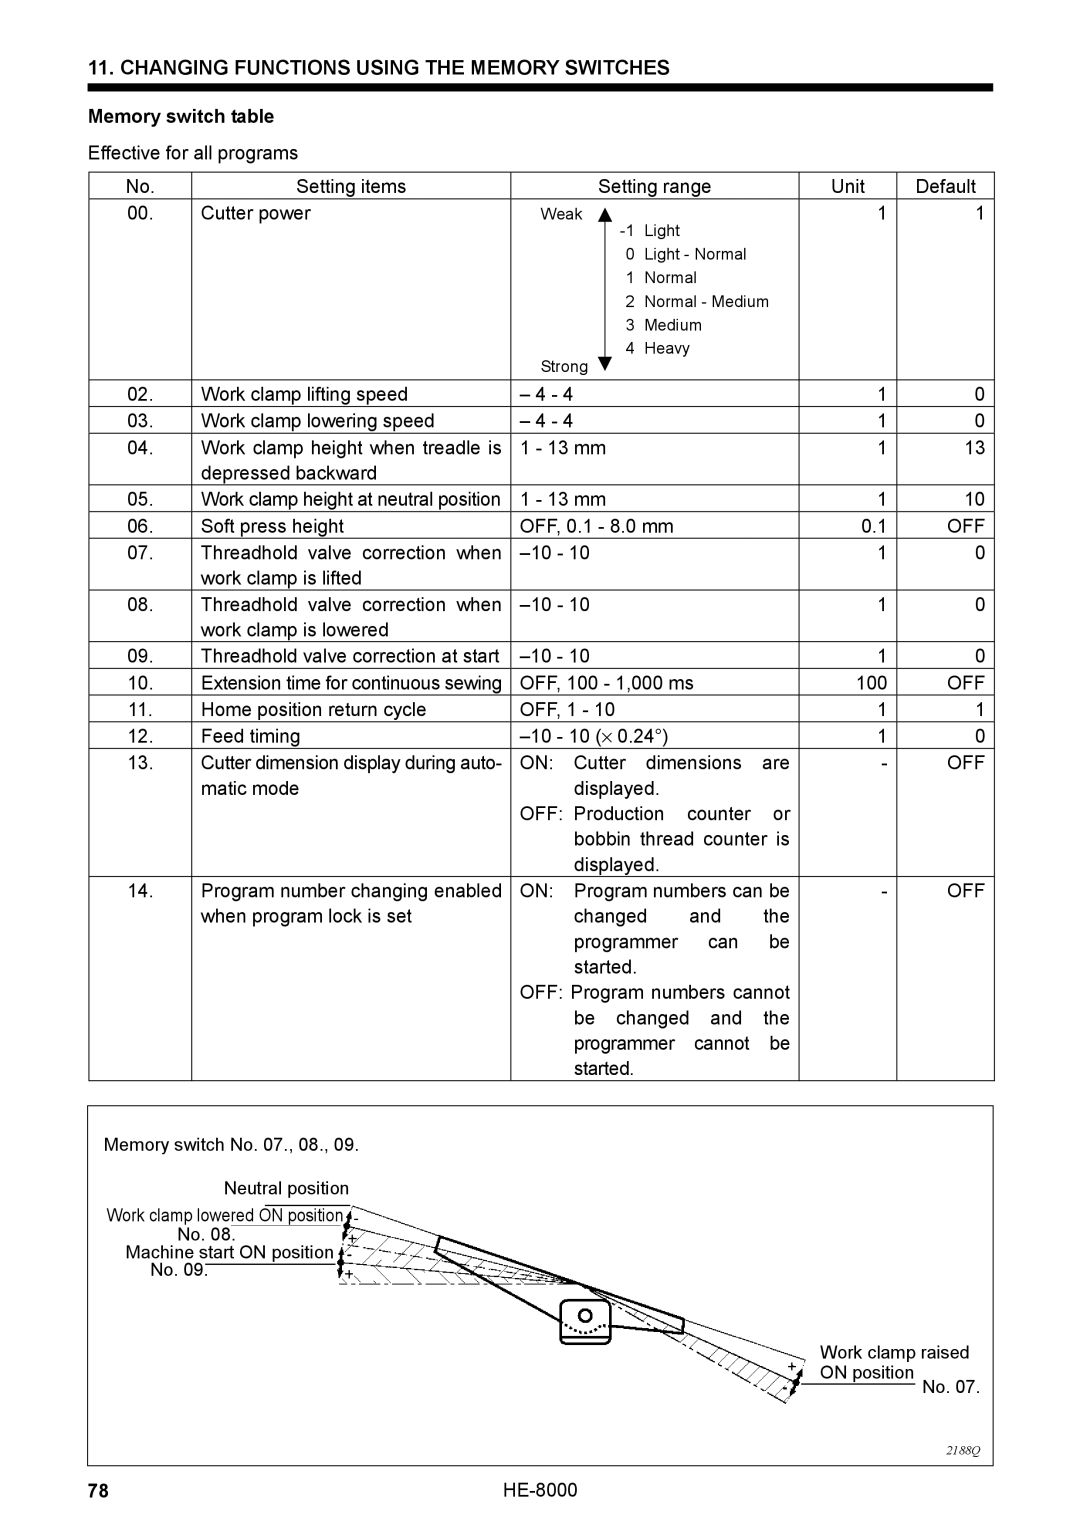 Motorola HE-8000 I, LH4-B800E instruction manual Memory switch table 